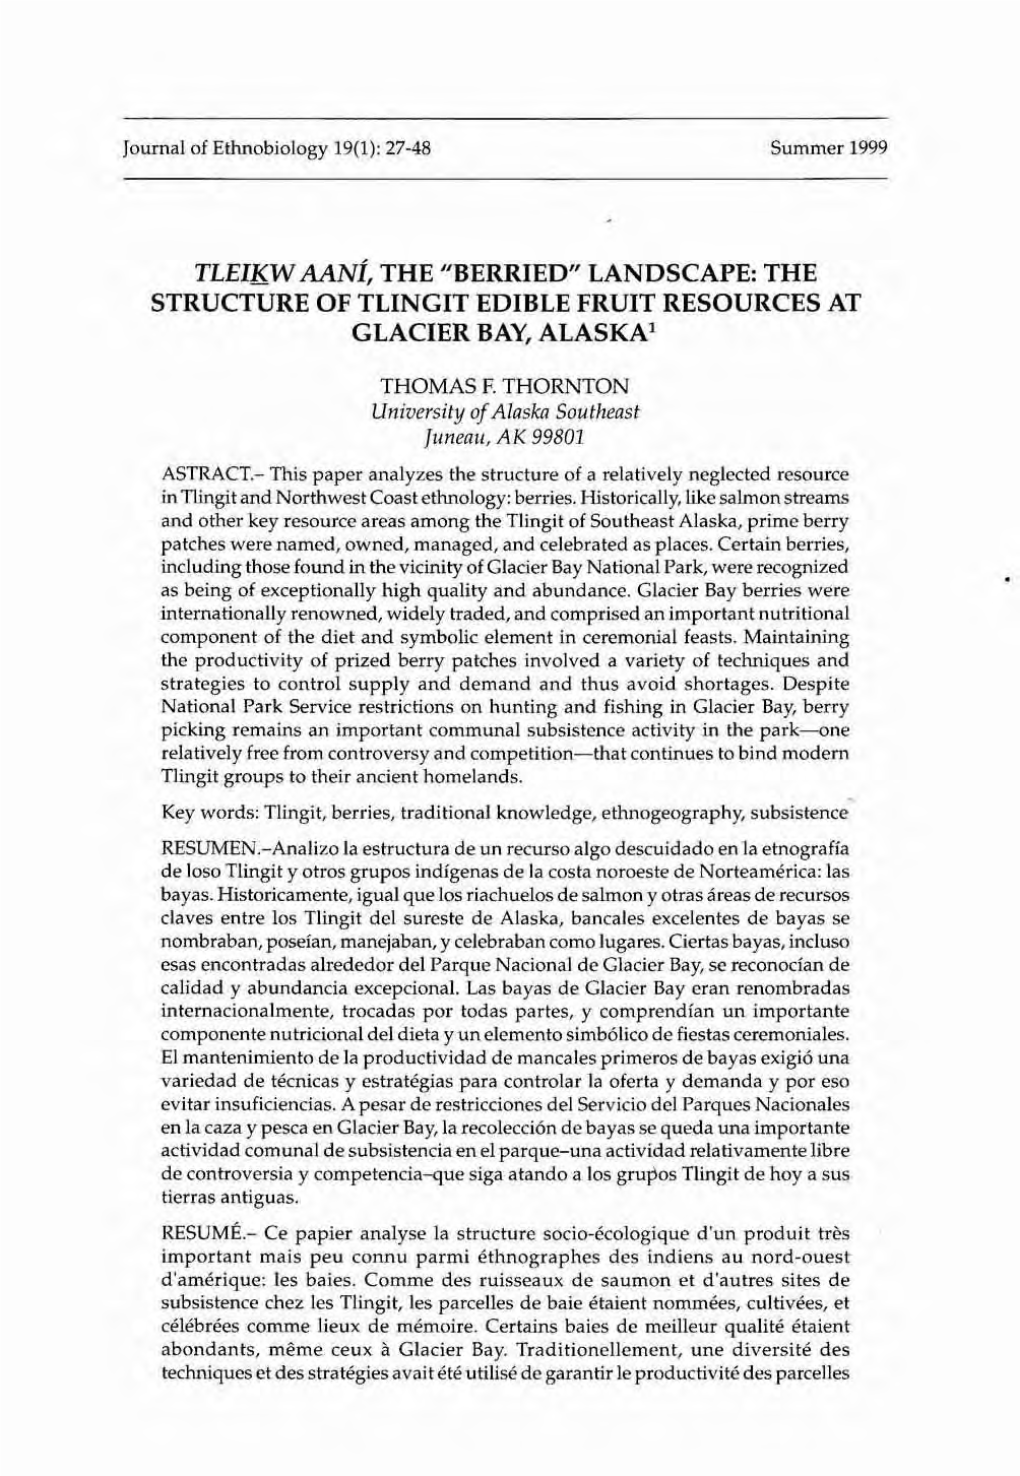 TLEIKW Aani, the "BERRIED" LANDSCAPE: the STRUCTURE of TLINGIT EDIBLE FRUIT RESOURCES at GLACIER BAY, ALASKA'